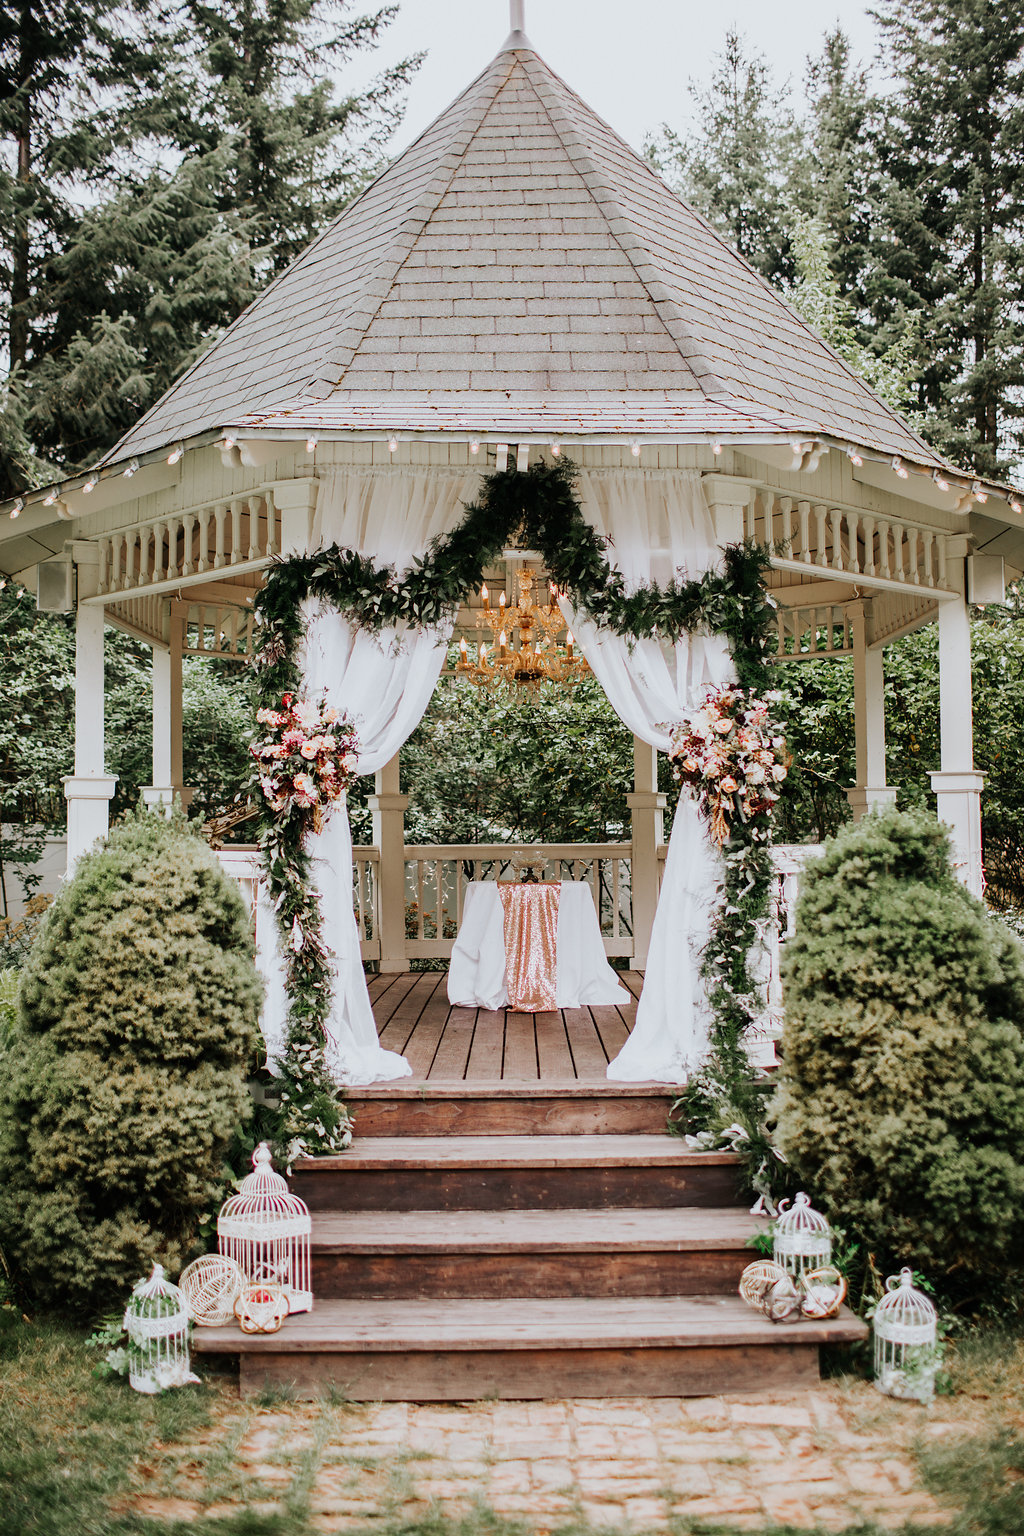 gazebo wedding venues - https://ruffledblog.com/glam-autumn-wedding-at-belle-gardens